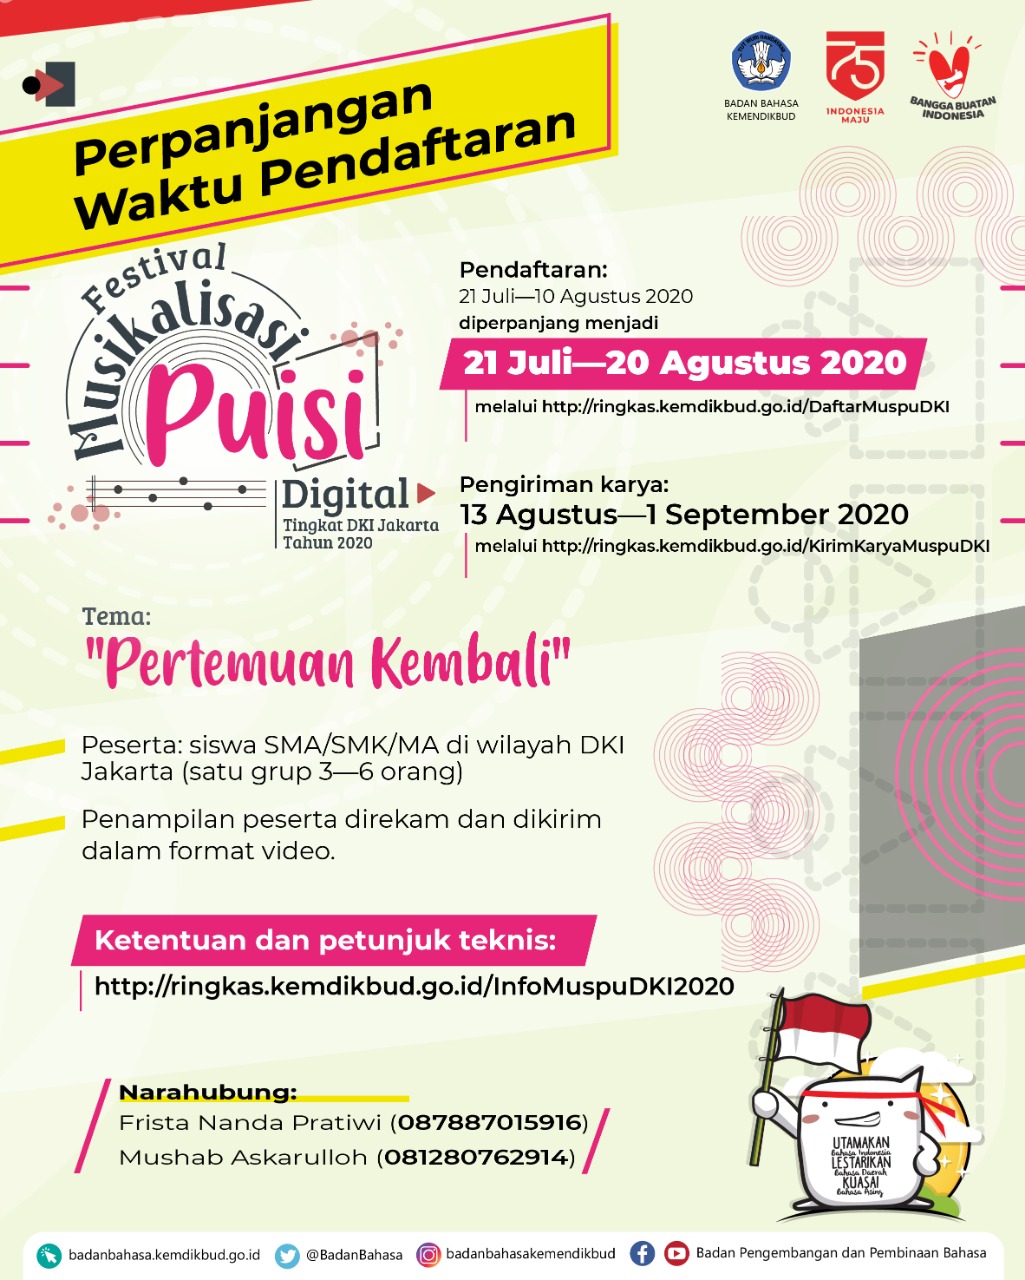 Perpanjangan Waktu Pendaftaran Festival Musikalisasi Puisi Digital Tingkat DKI Jakarta Tahun 2020